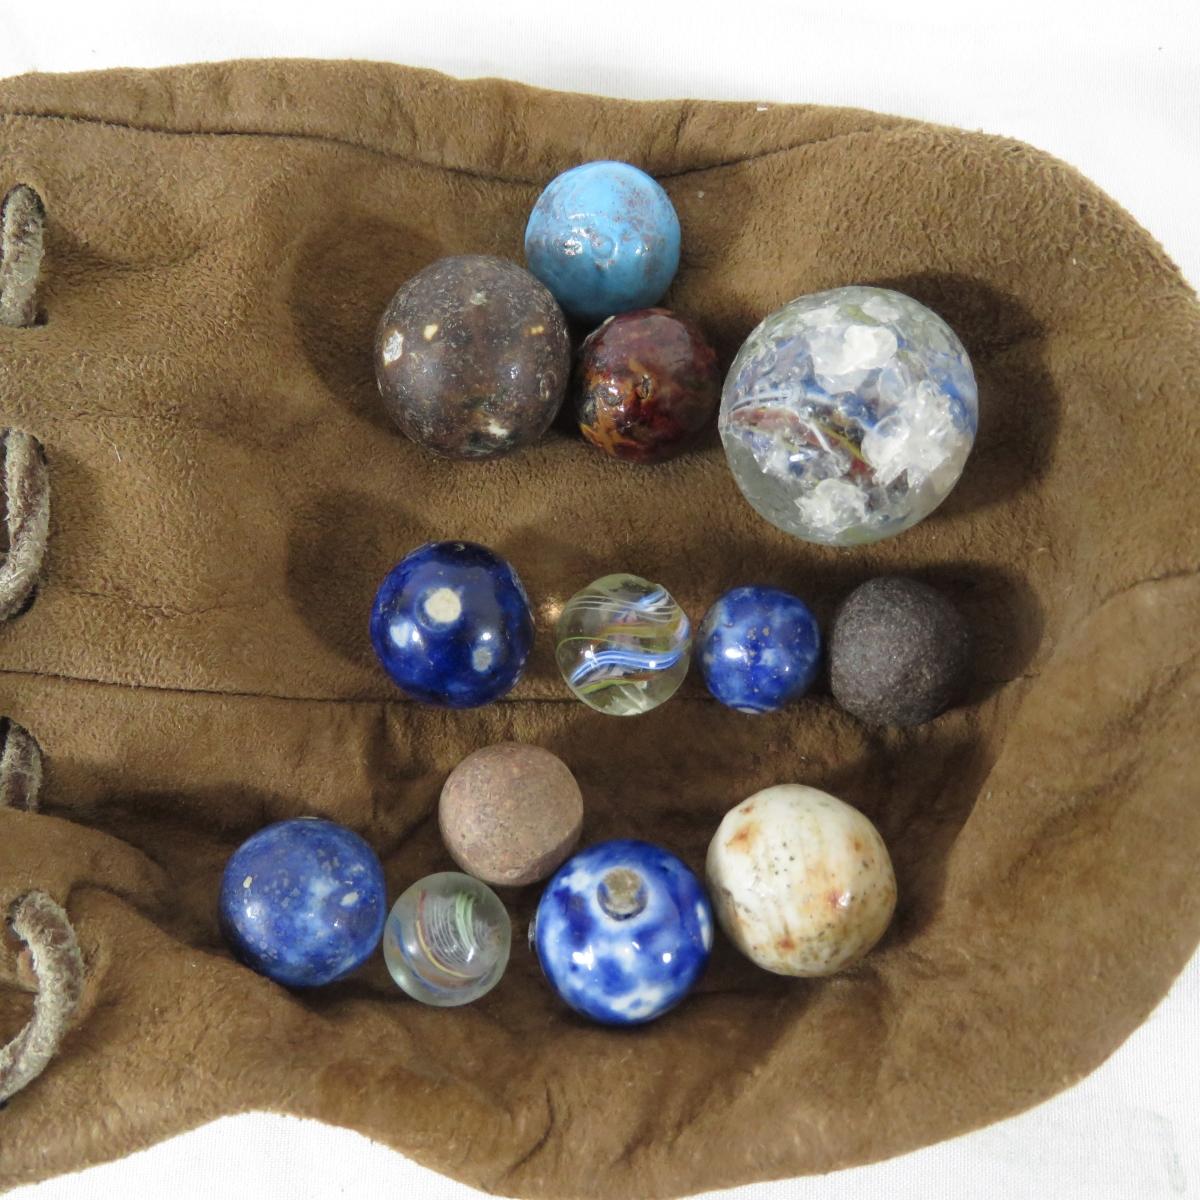 Antique & vintage marbles including large swirl